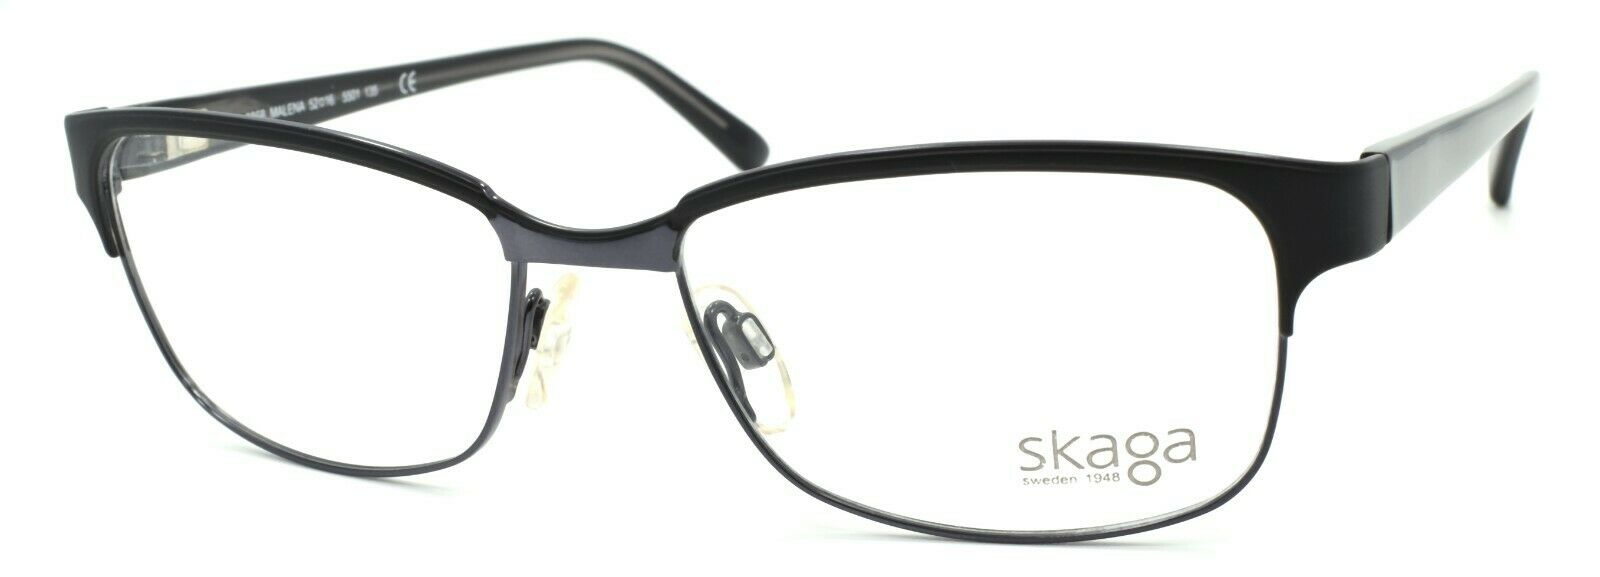 1-Skaga 3868 Malena 5501 Women's Eyeglasses Frames 52-16-135 Black-IKSpecs